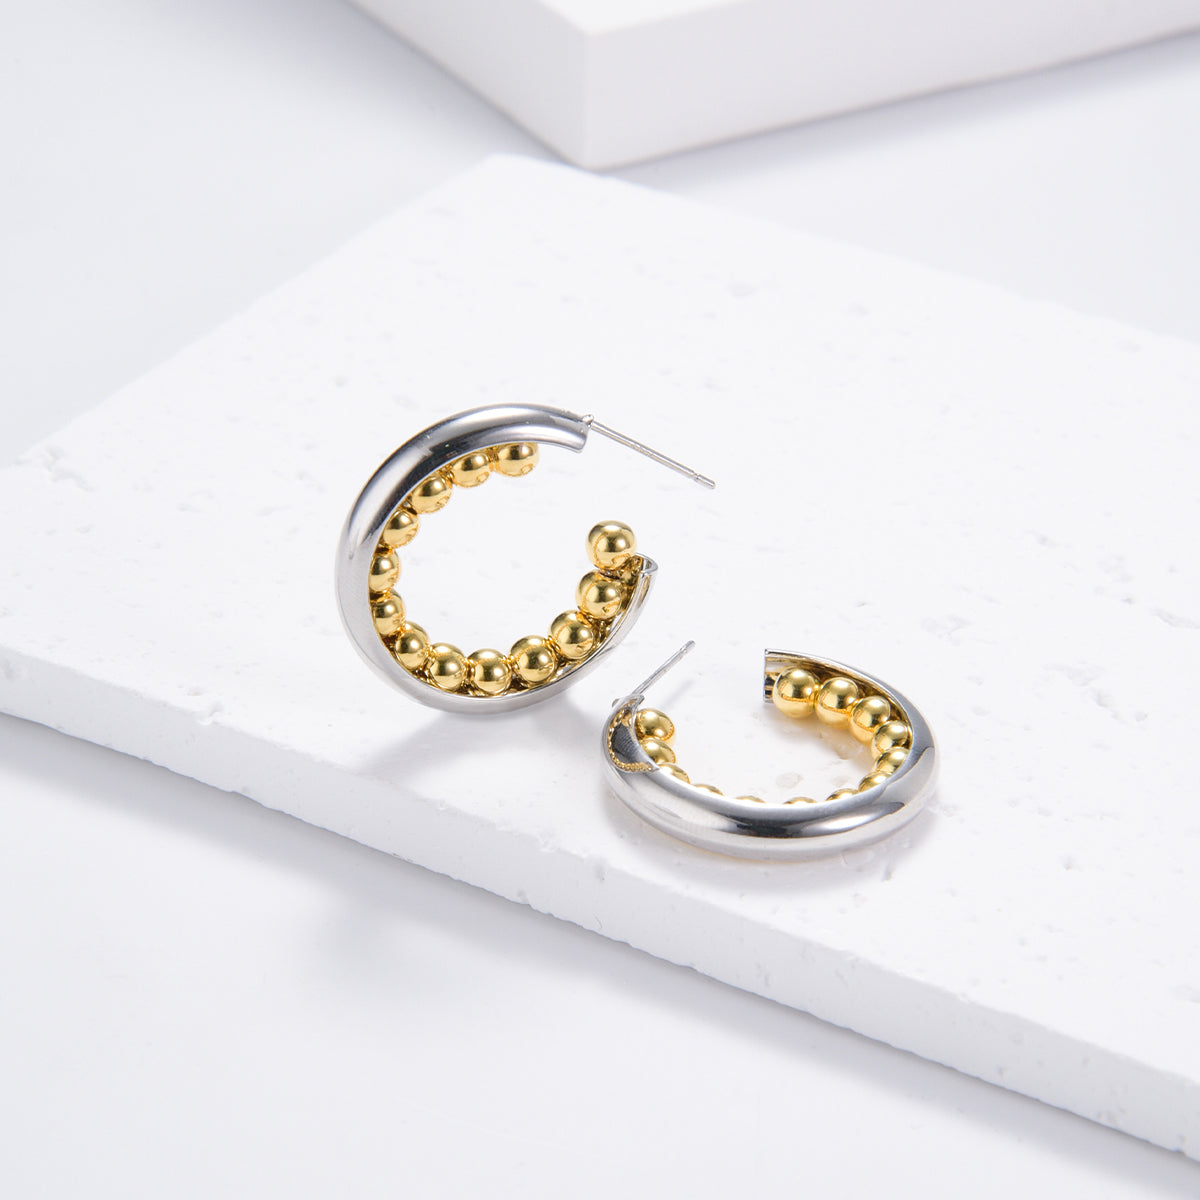 Golden beads on silver circular earrings